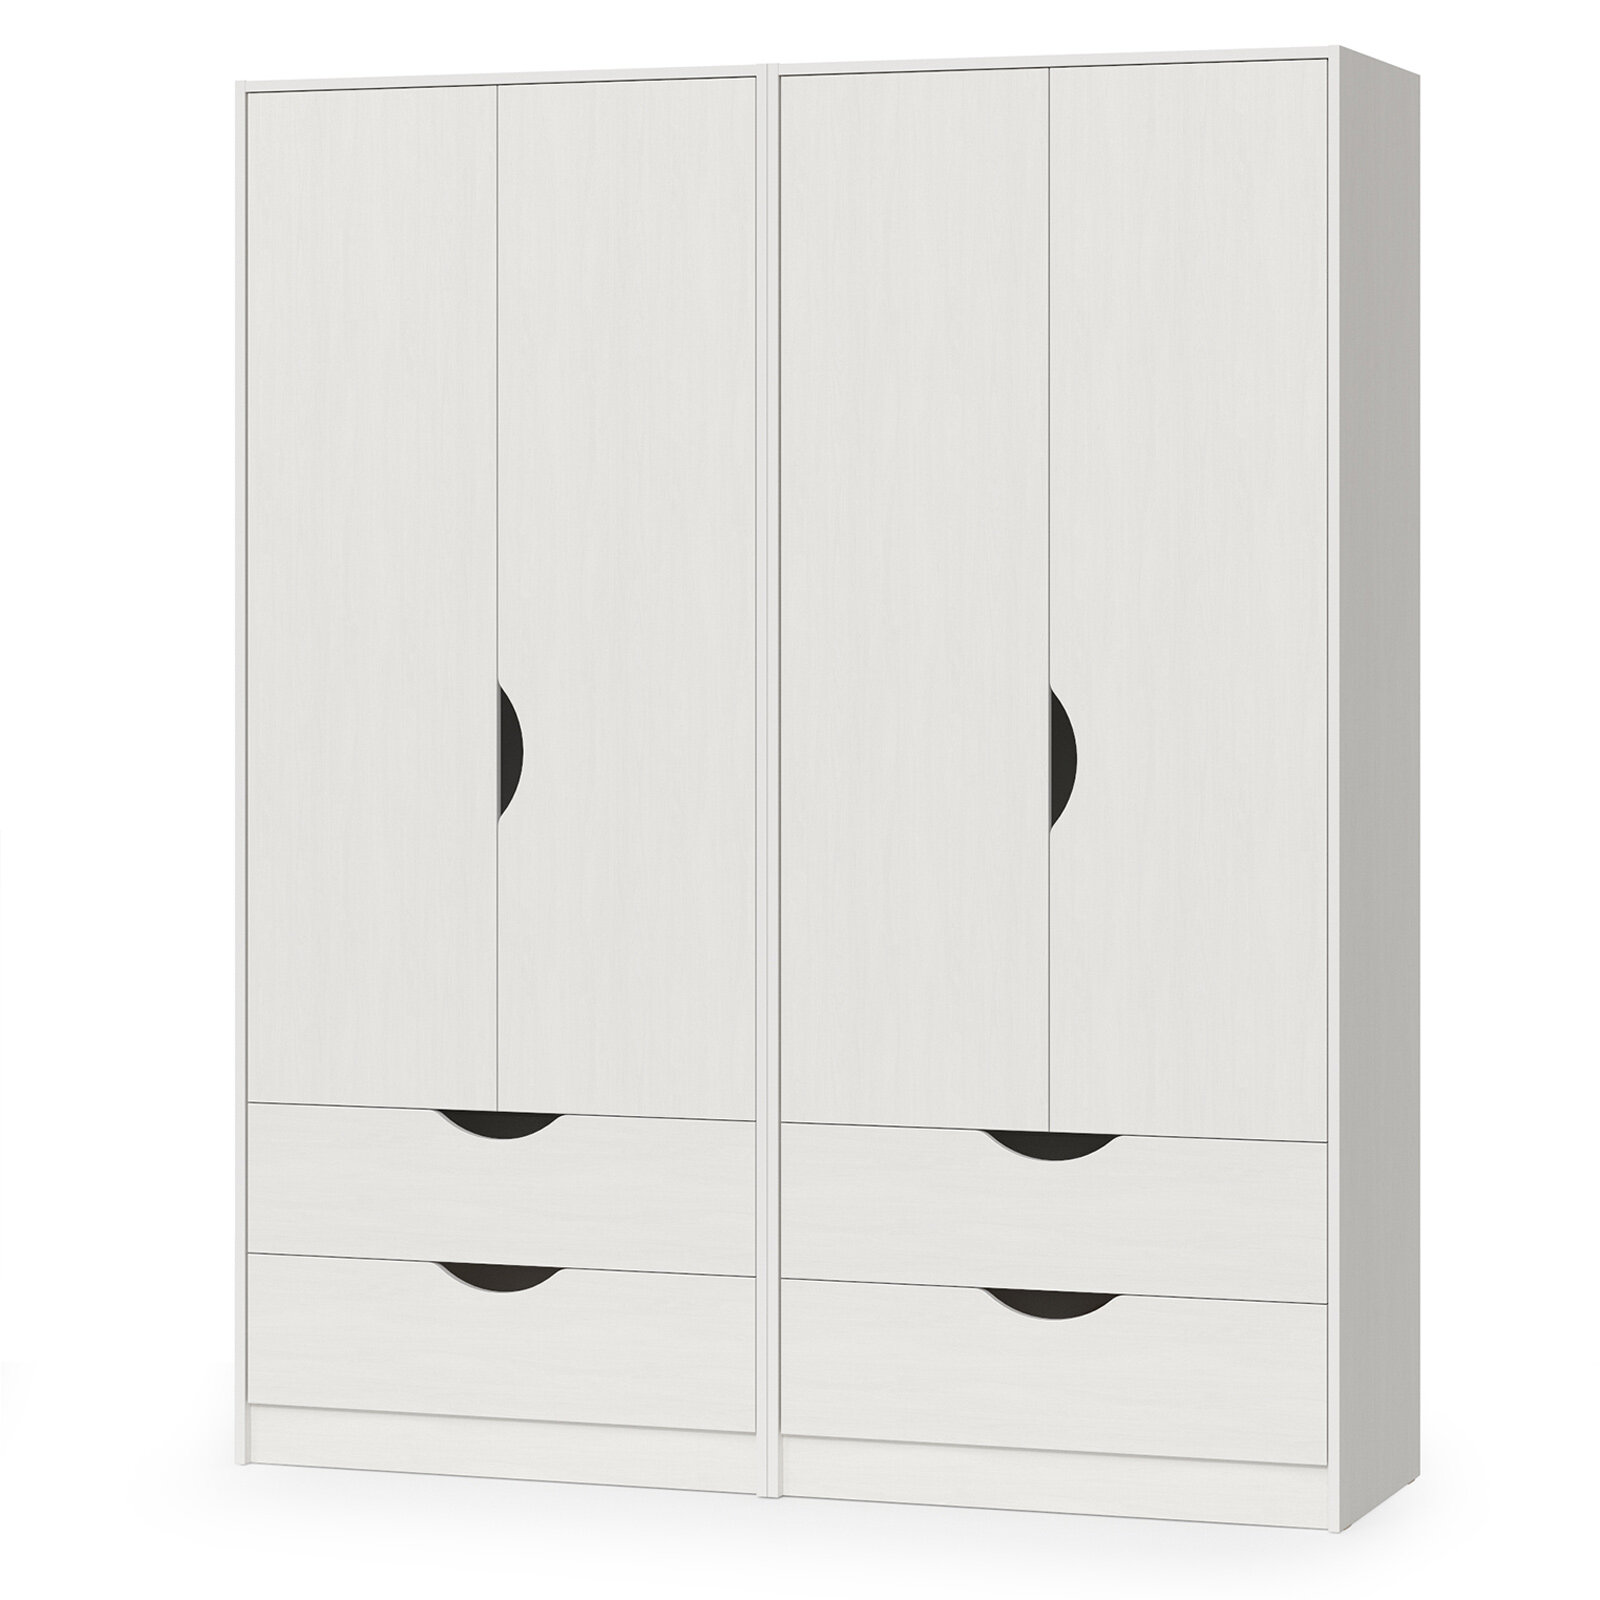 Два детских шкафа для одежды Уна цвет белый(структура Поры дерева) ШхГхВ 1676х497х2053 см.